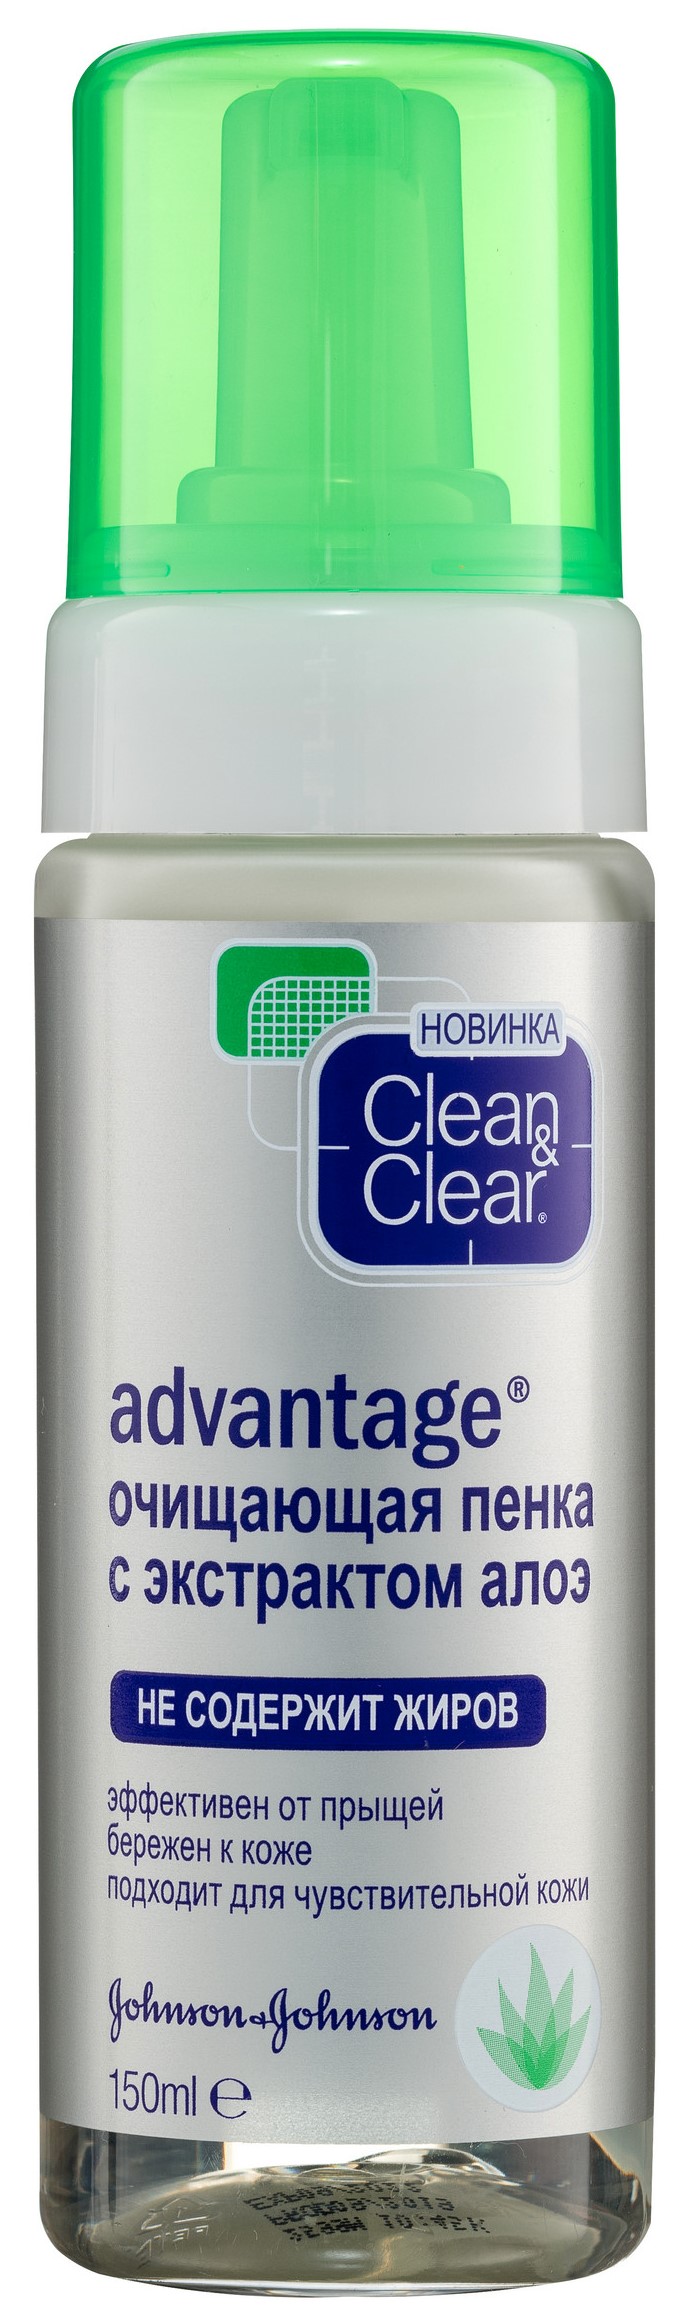 Очищающая пенка с экстрактом алоэ Clean&Clear Advantage 150 мл очищающая пенка с экстрактом алоэ